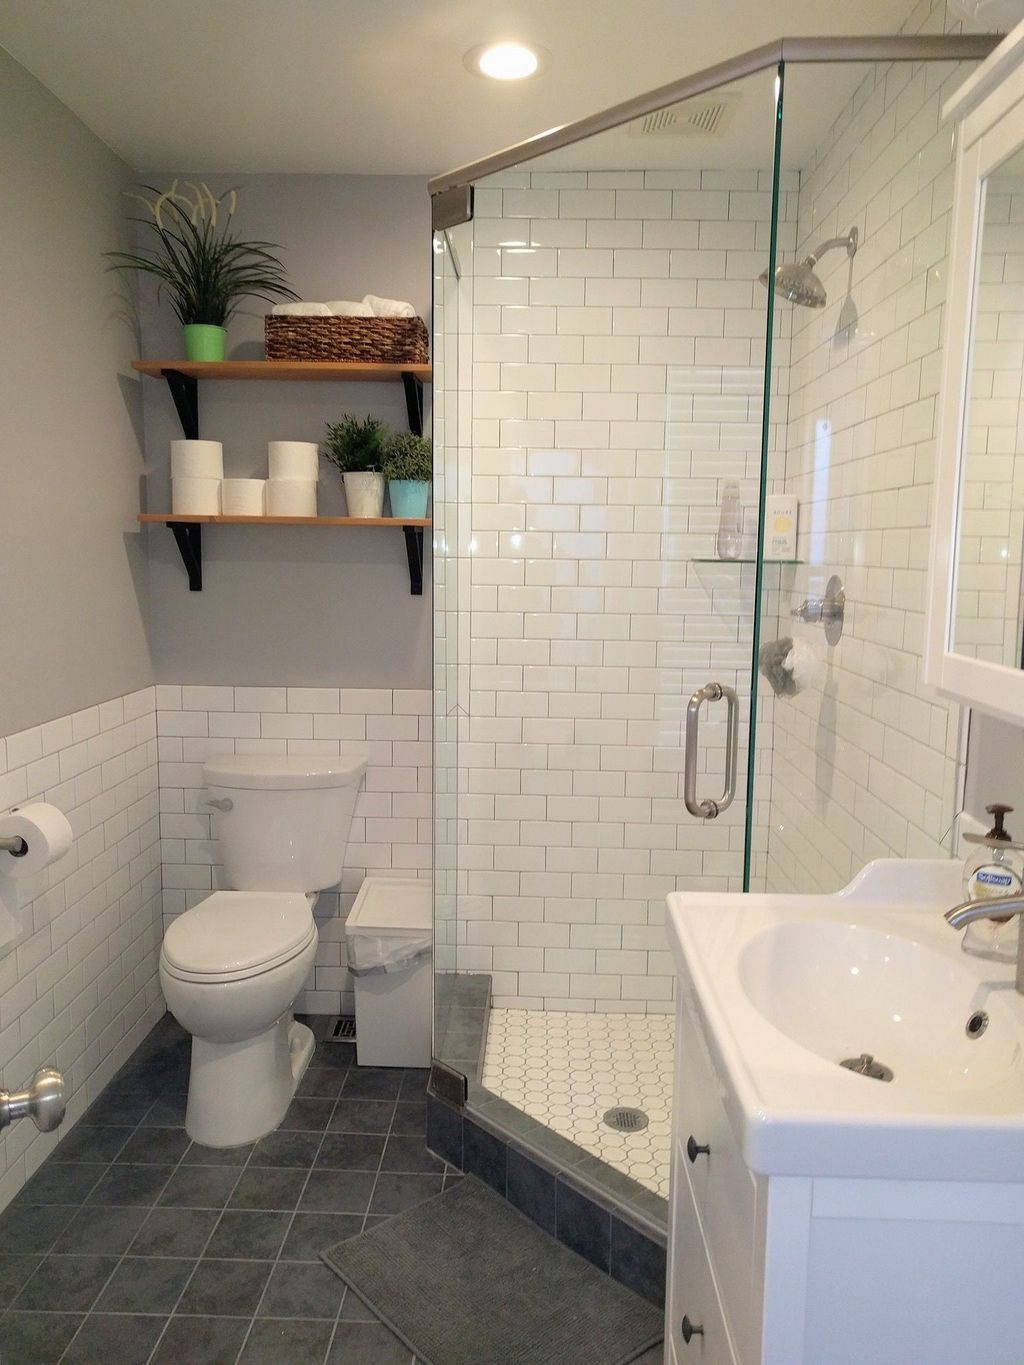 39 Awesome Small Bathroom Remodel Ideas On A Budget Hmdcrtn